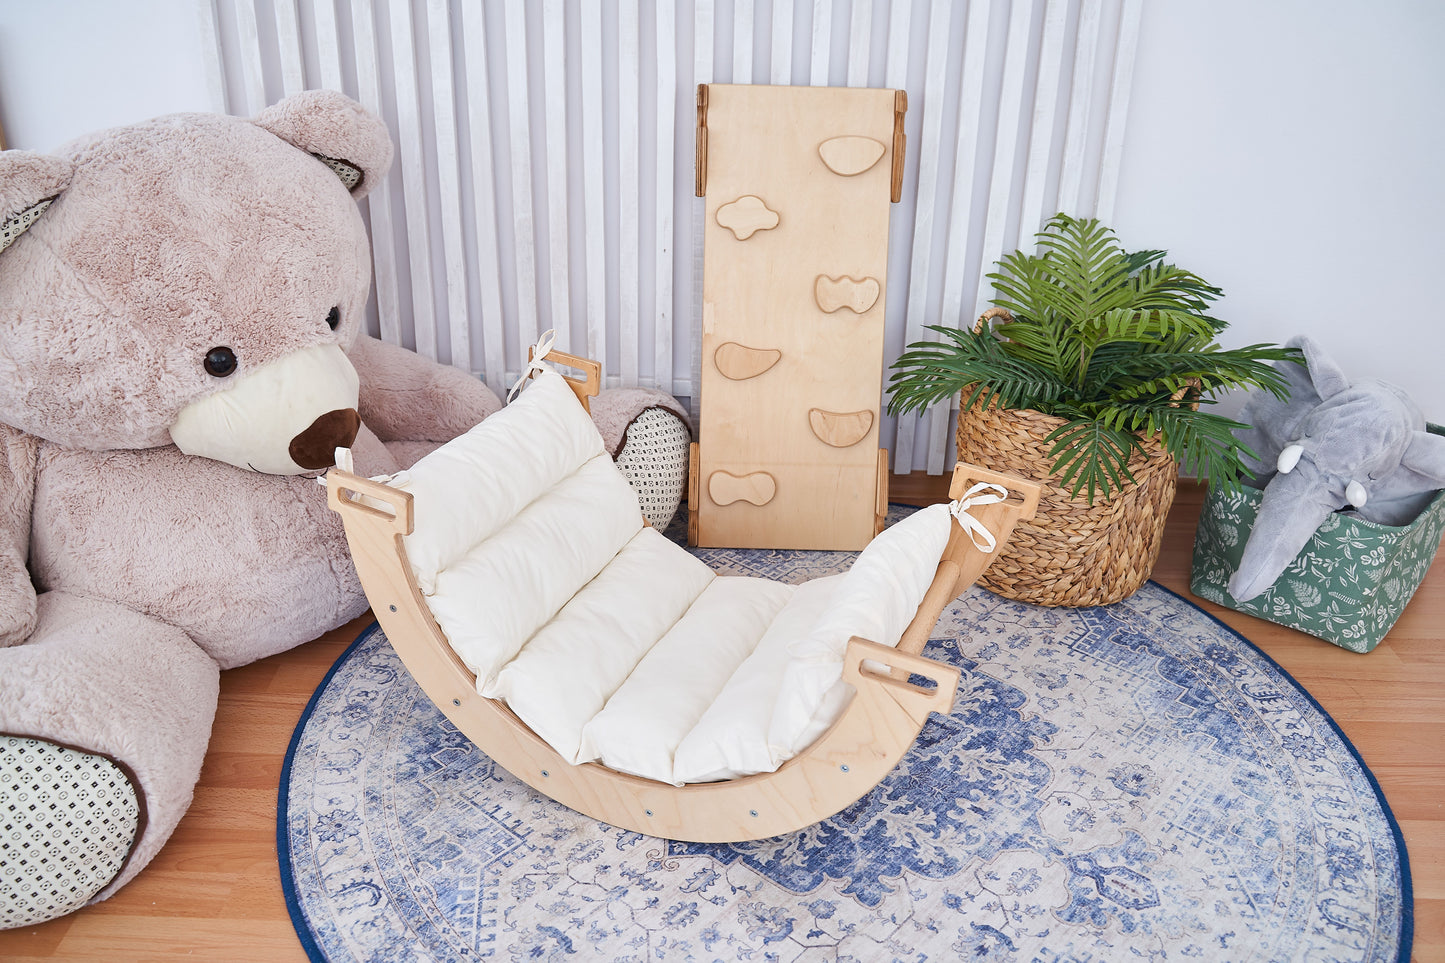 Montessori Climbing Board Arch Set (Arch+Ramp+Cushion) Wood